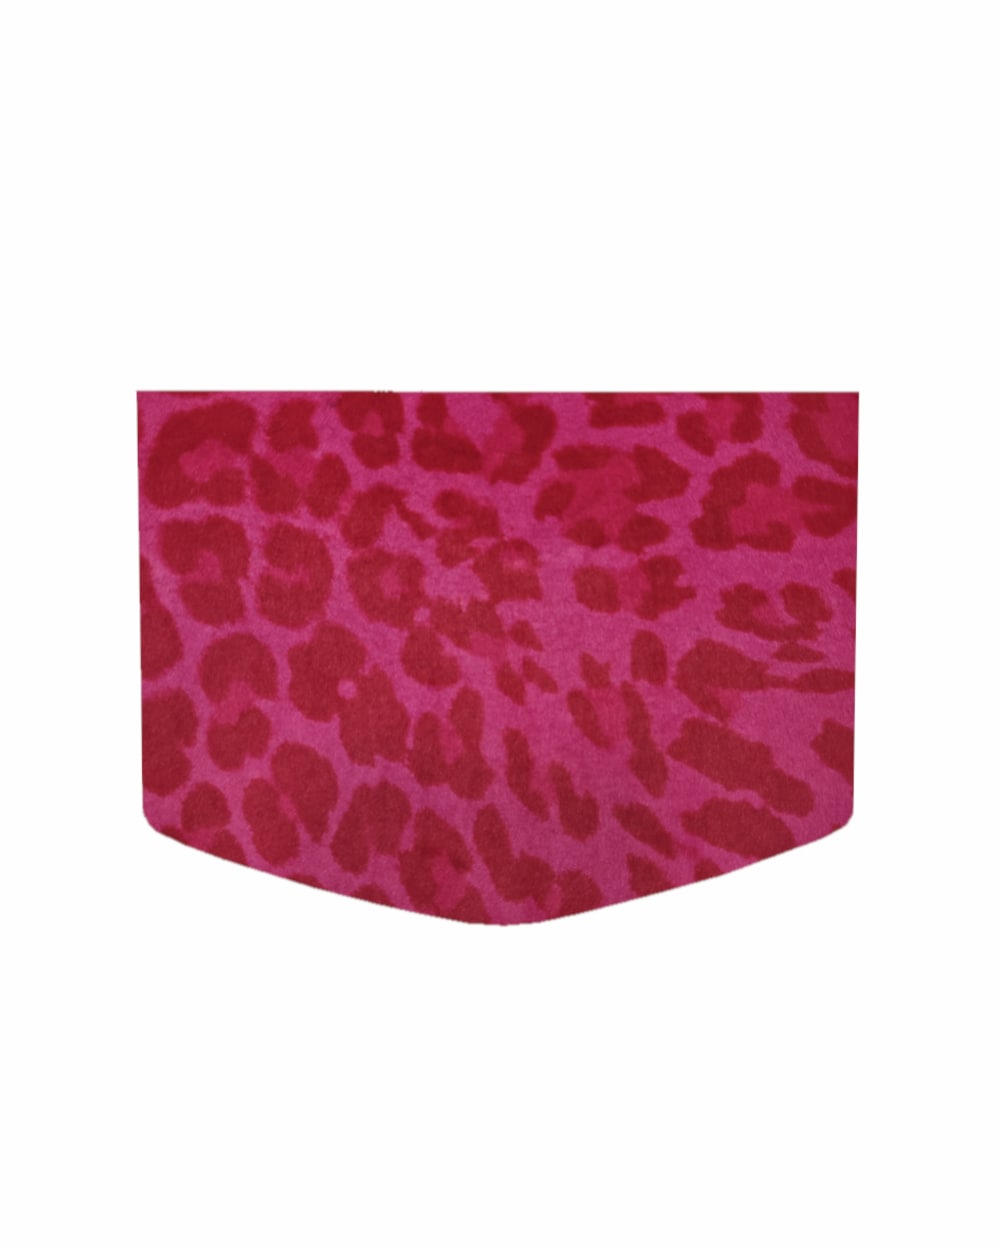 KLAPA pink leopard 1